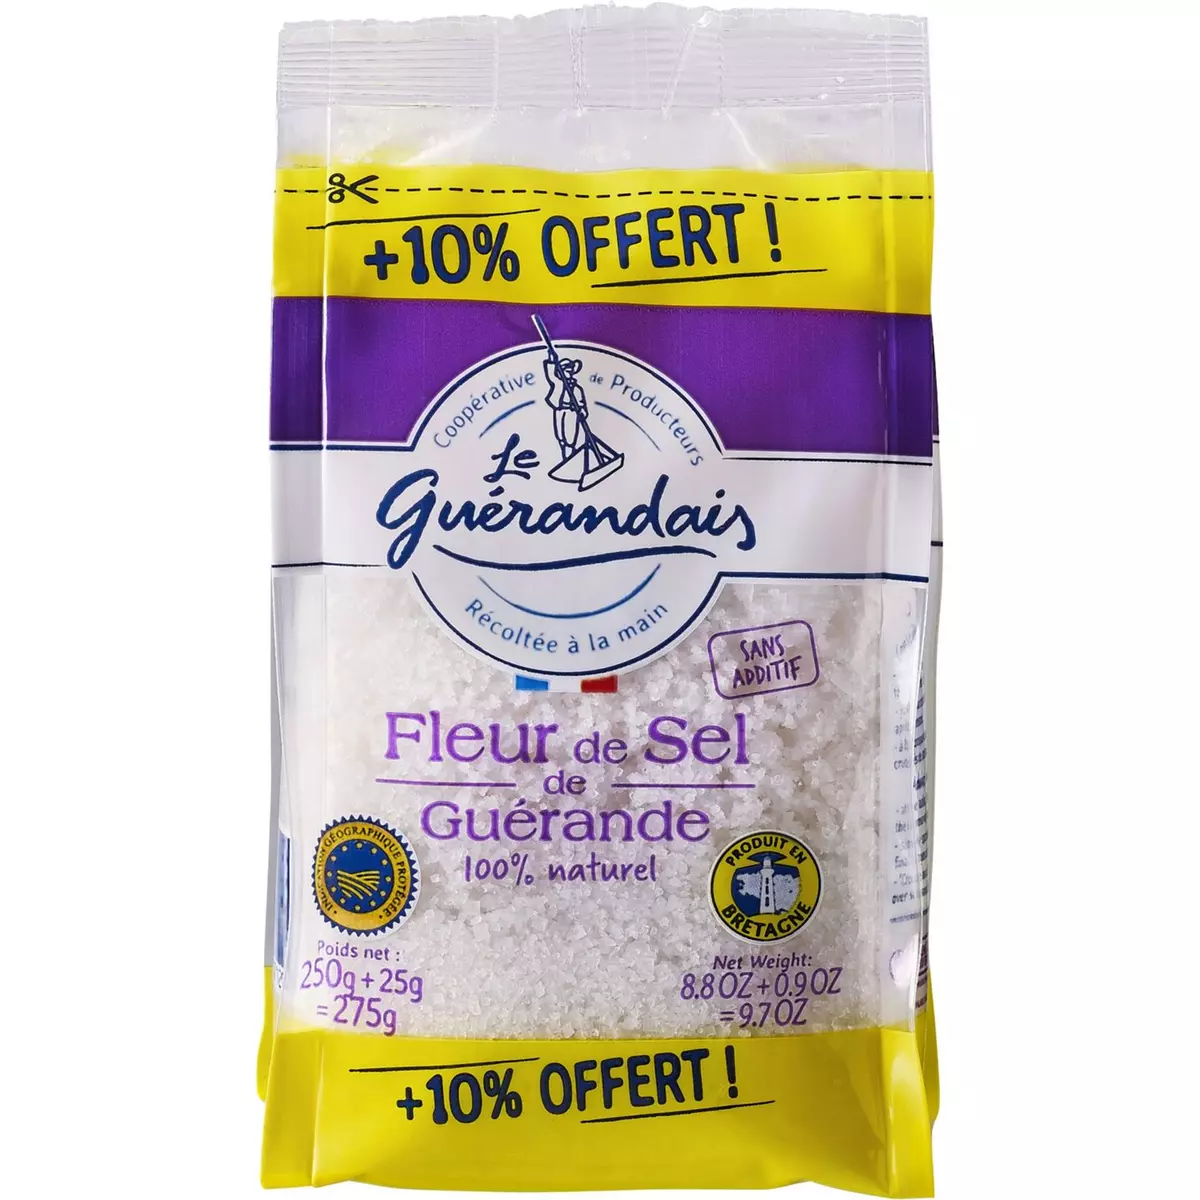 LE GUERANDAIS Fleur de sel de Guérande IGP 250g+10% offert 275g